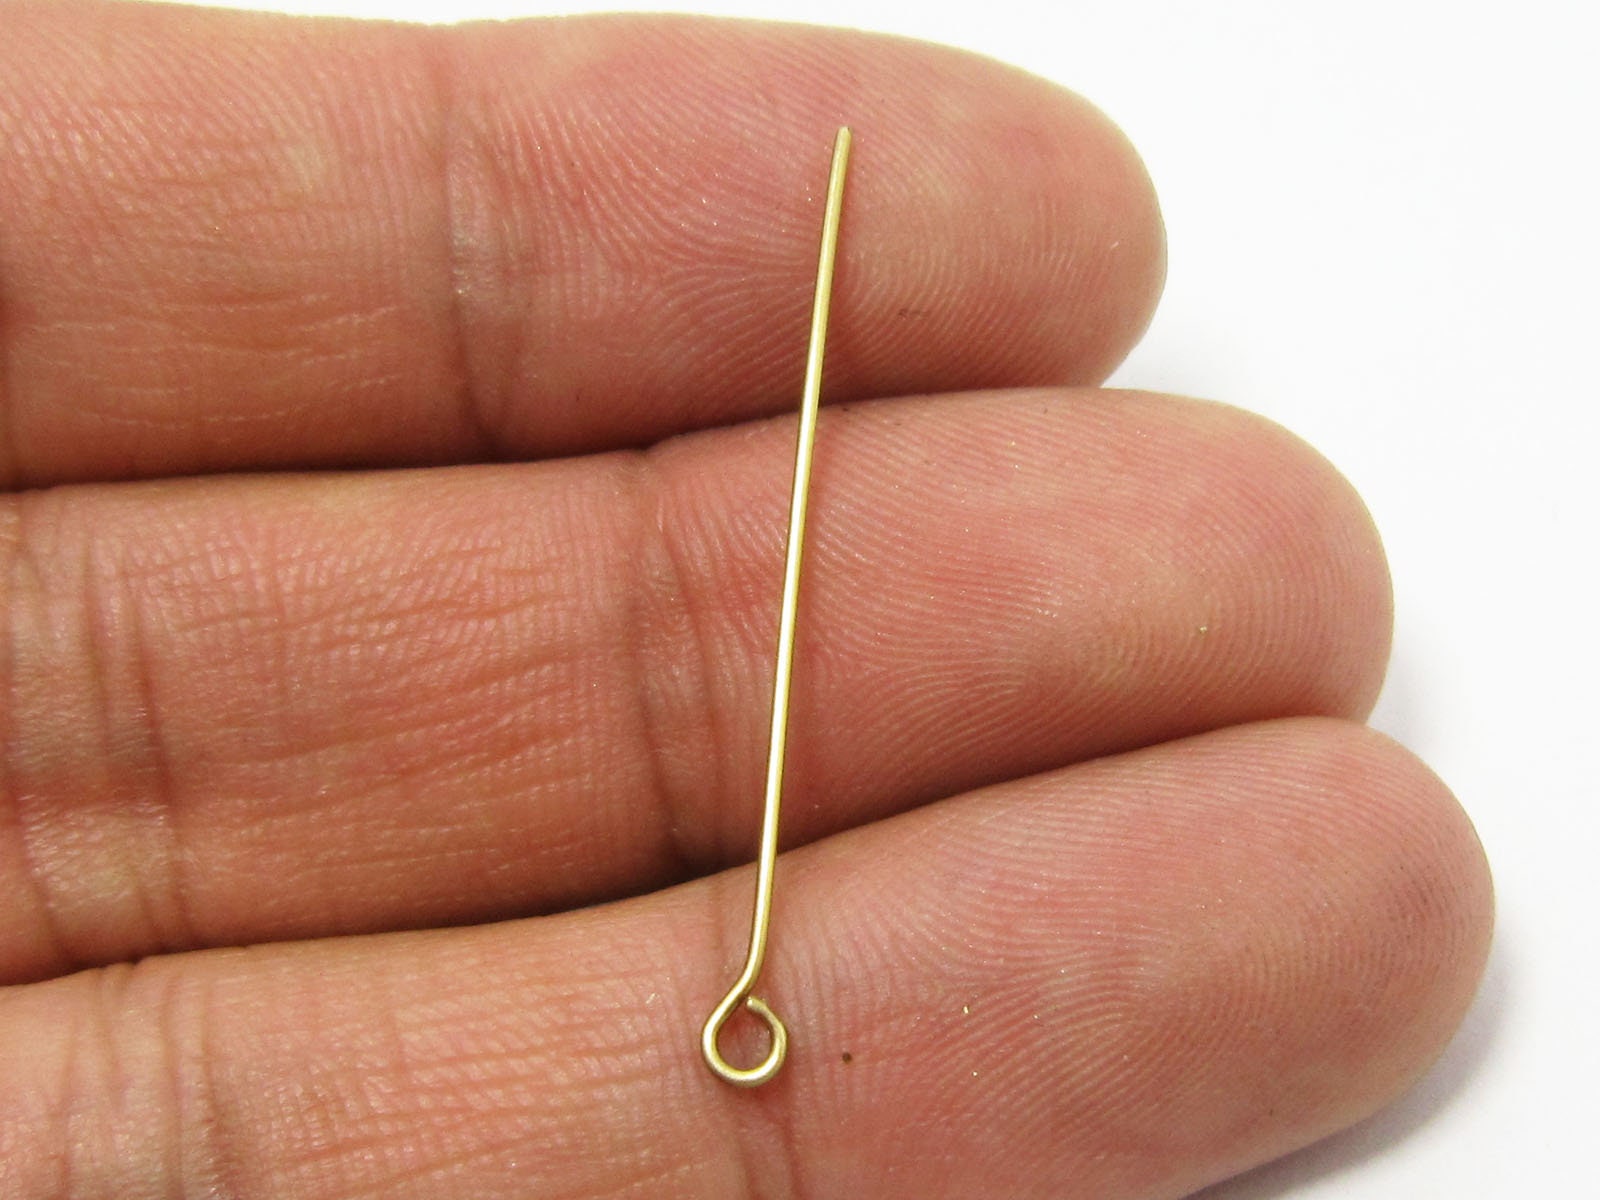 Brass Eye Pin, Size: 45mm, Packaging Type: Packet at Rs 2/gram in Jaipur